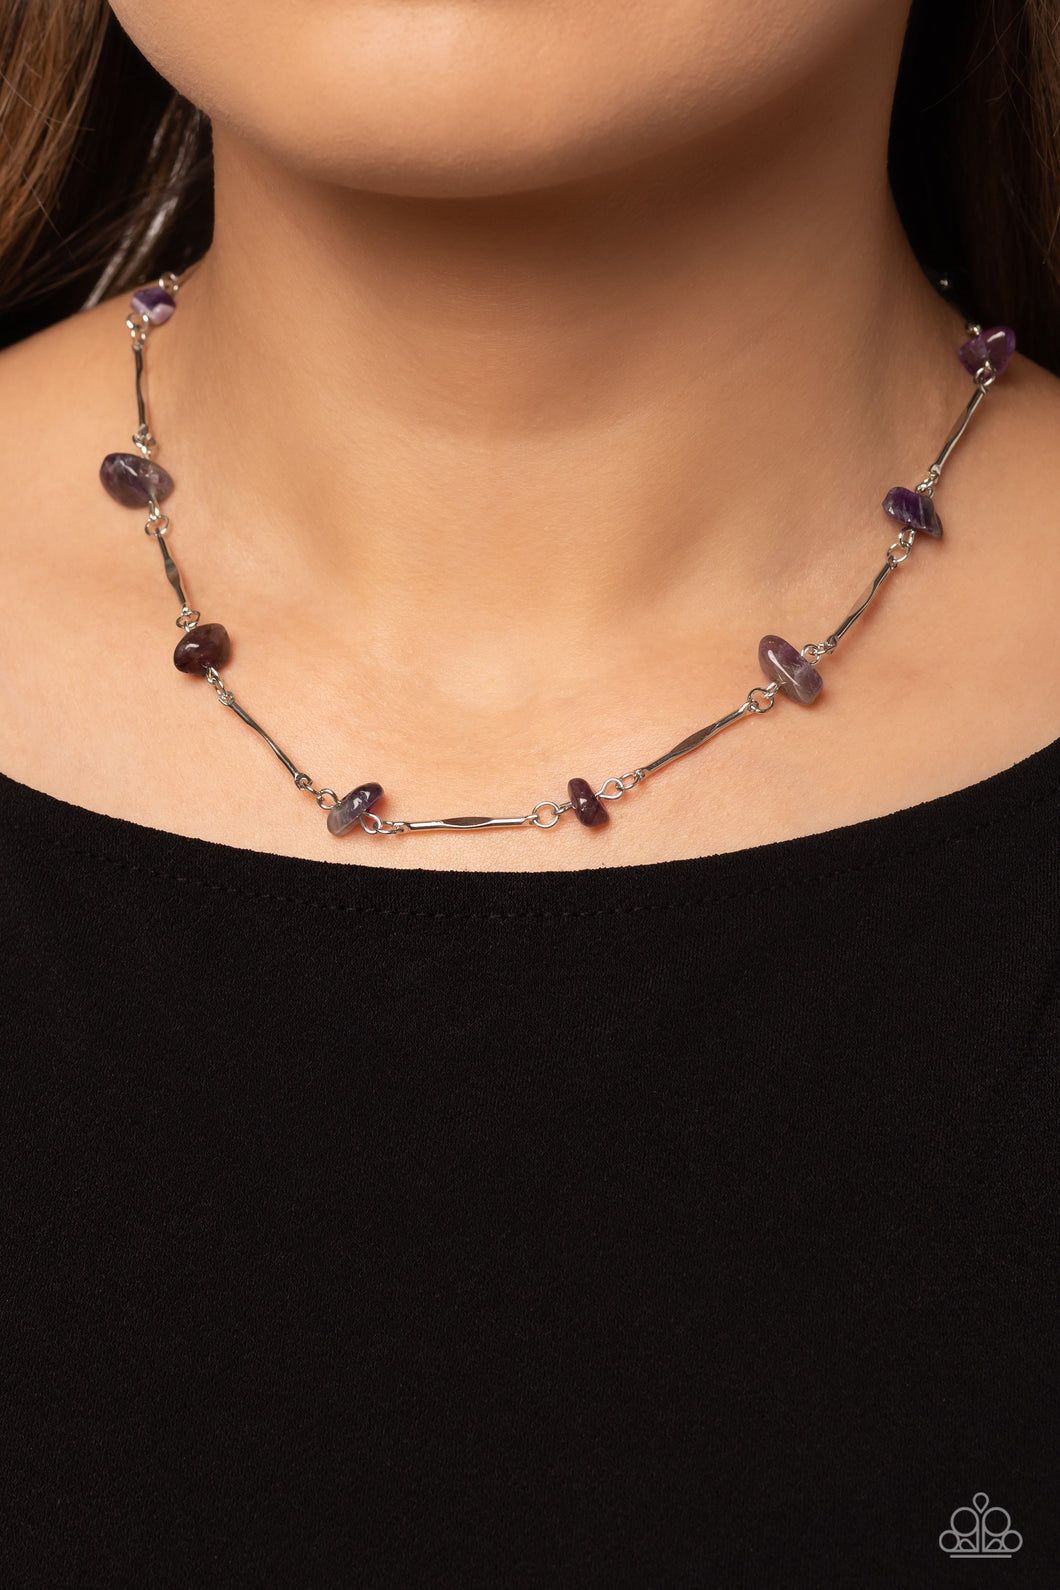 Paparazzi Chiseled Construction Purple Stone Necklace. $5 Jewelry. Get Free Shipping. $5 Jewelry 